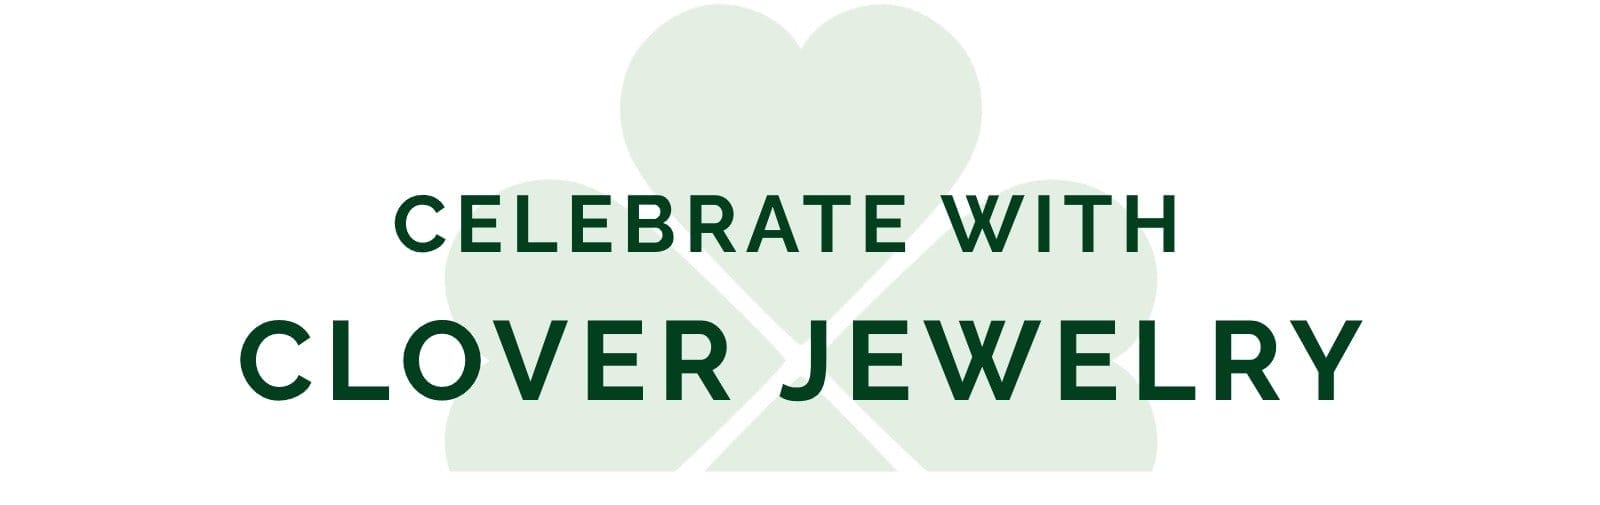 celebrate with clover jewelry